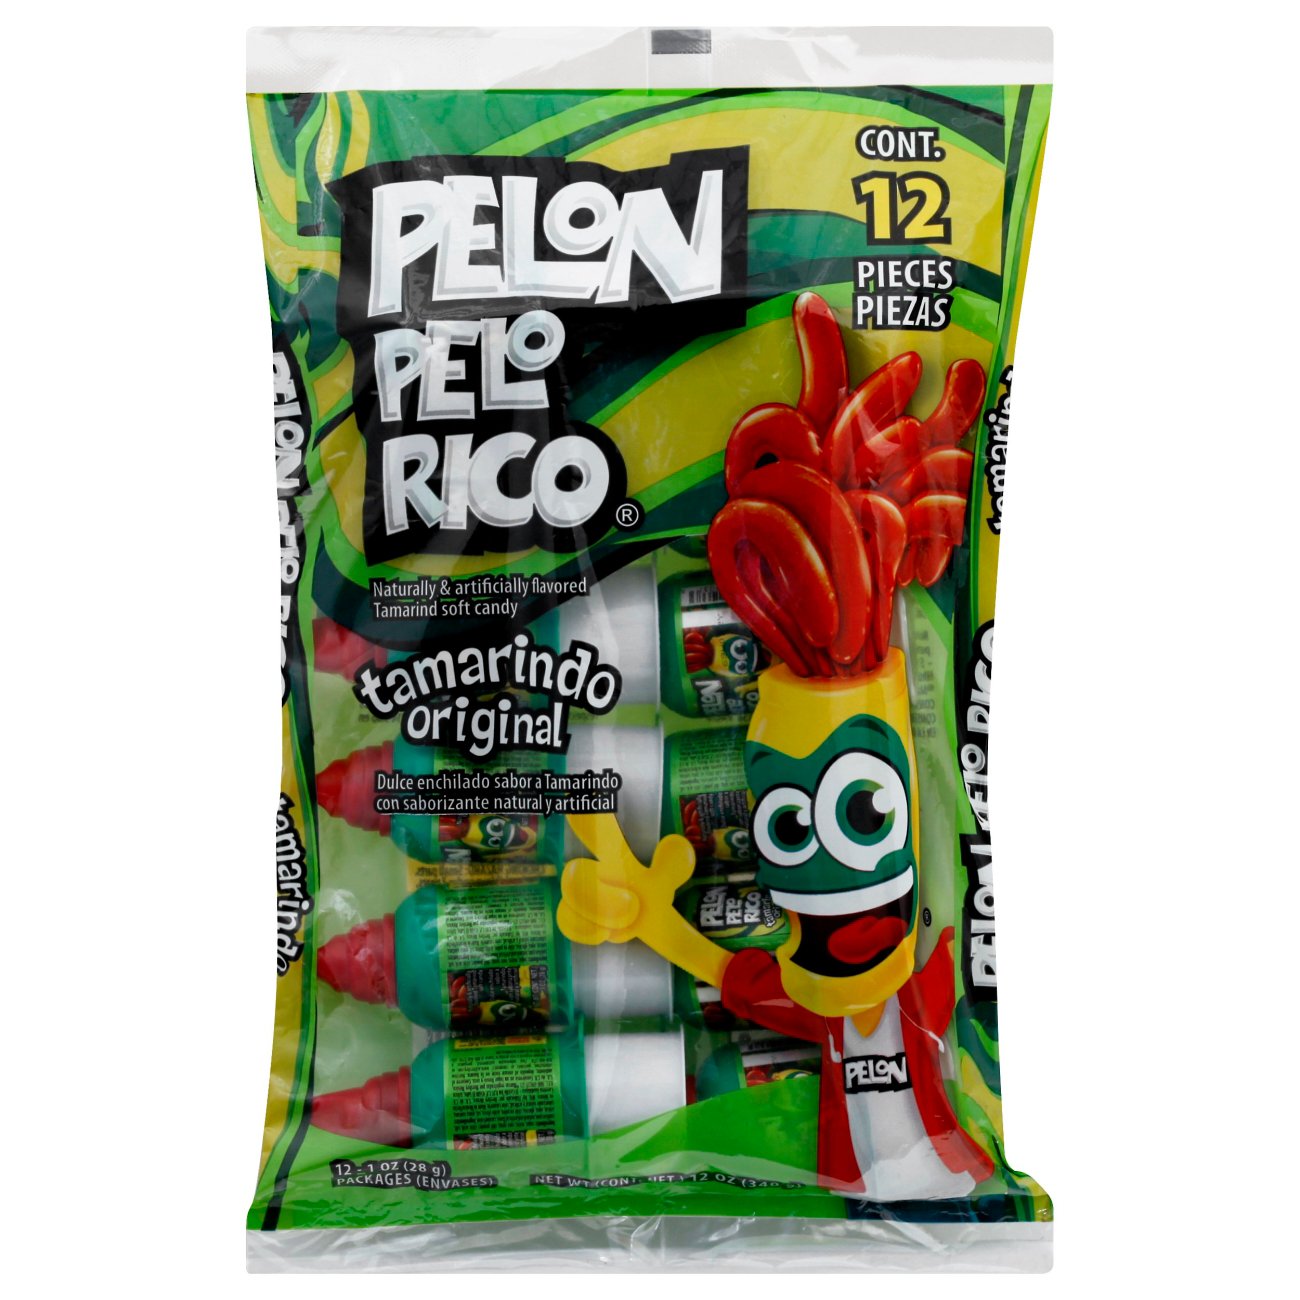 Lorena Pelon Pelo Rico Shop Candy At H E B